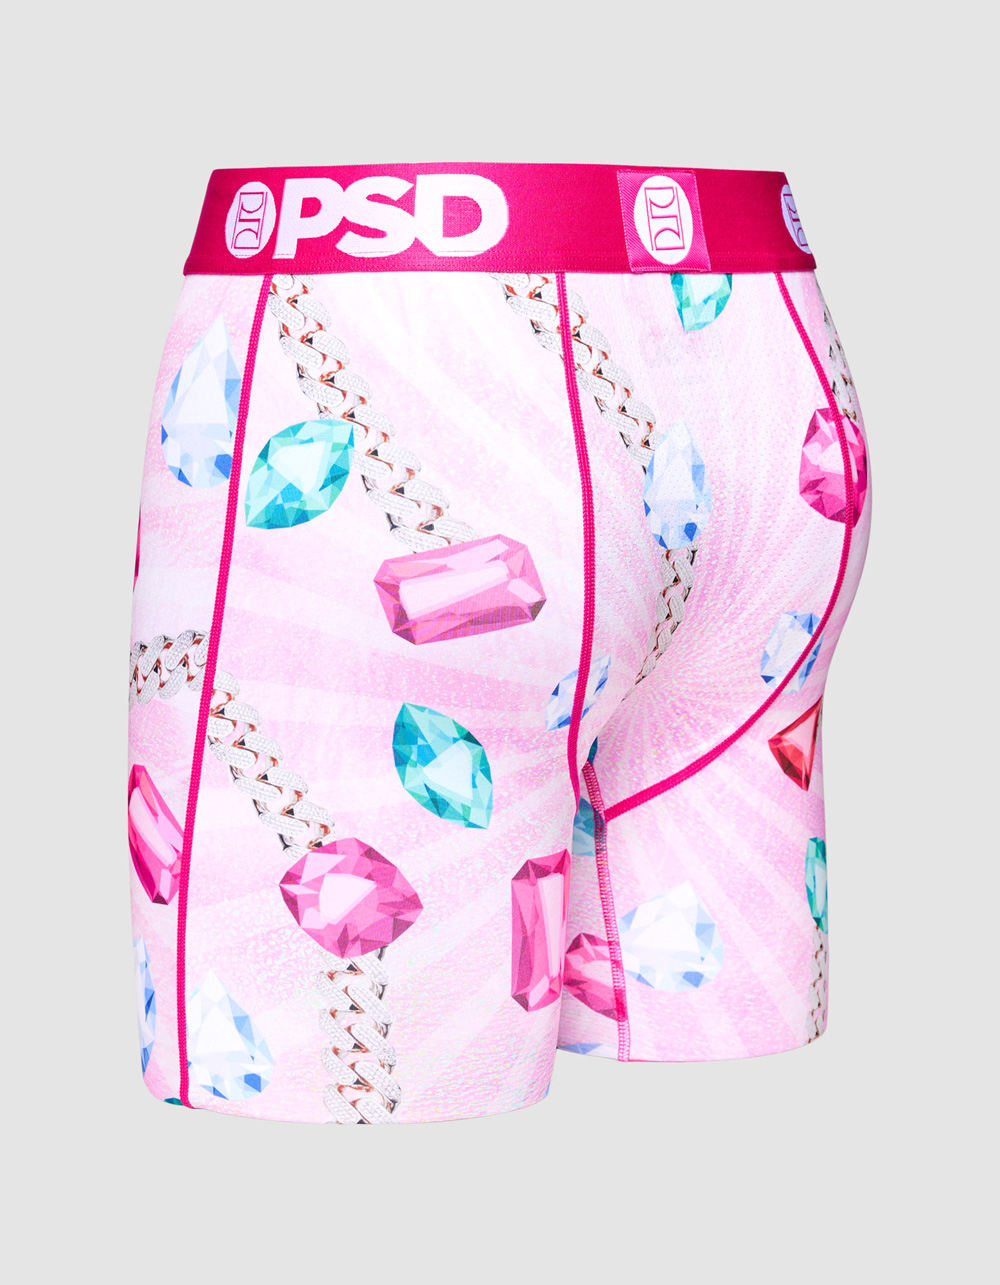 PSD Underwear Men's Boxer Briefs (Multi/Warface Baller/L), Multi/Warface  Baller, Large